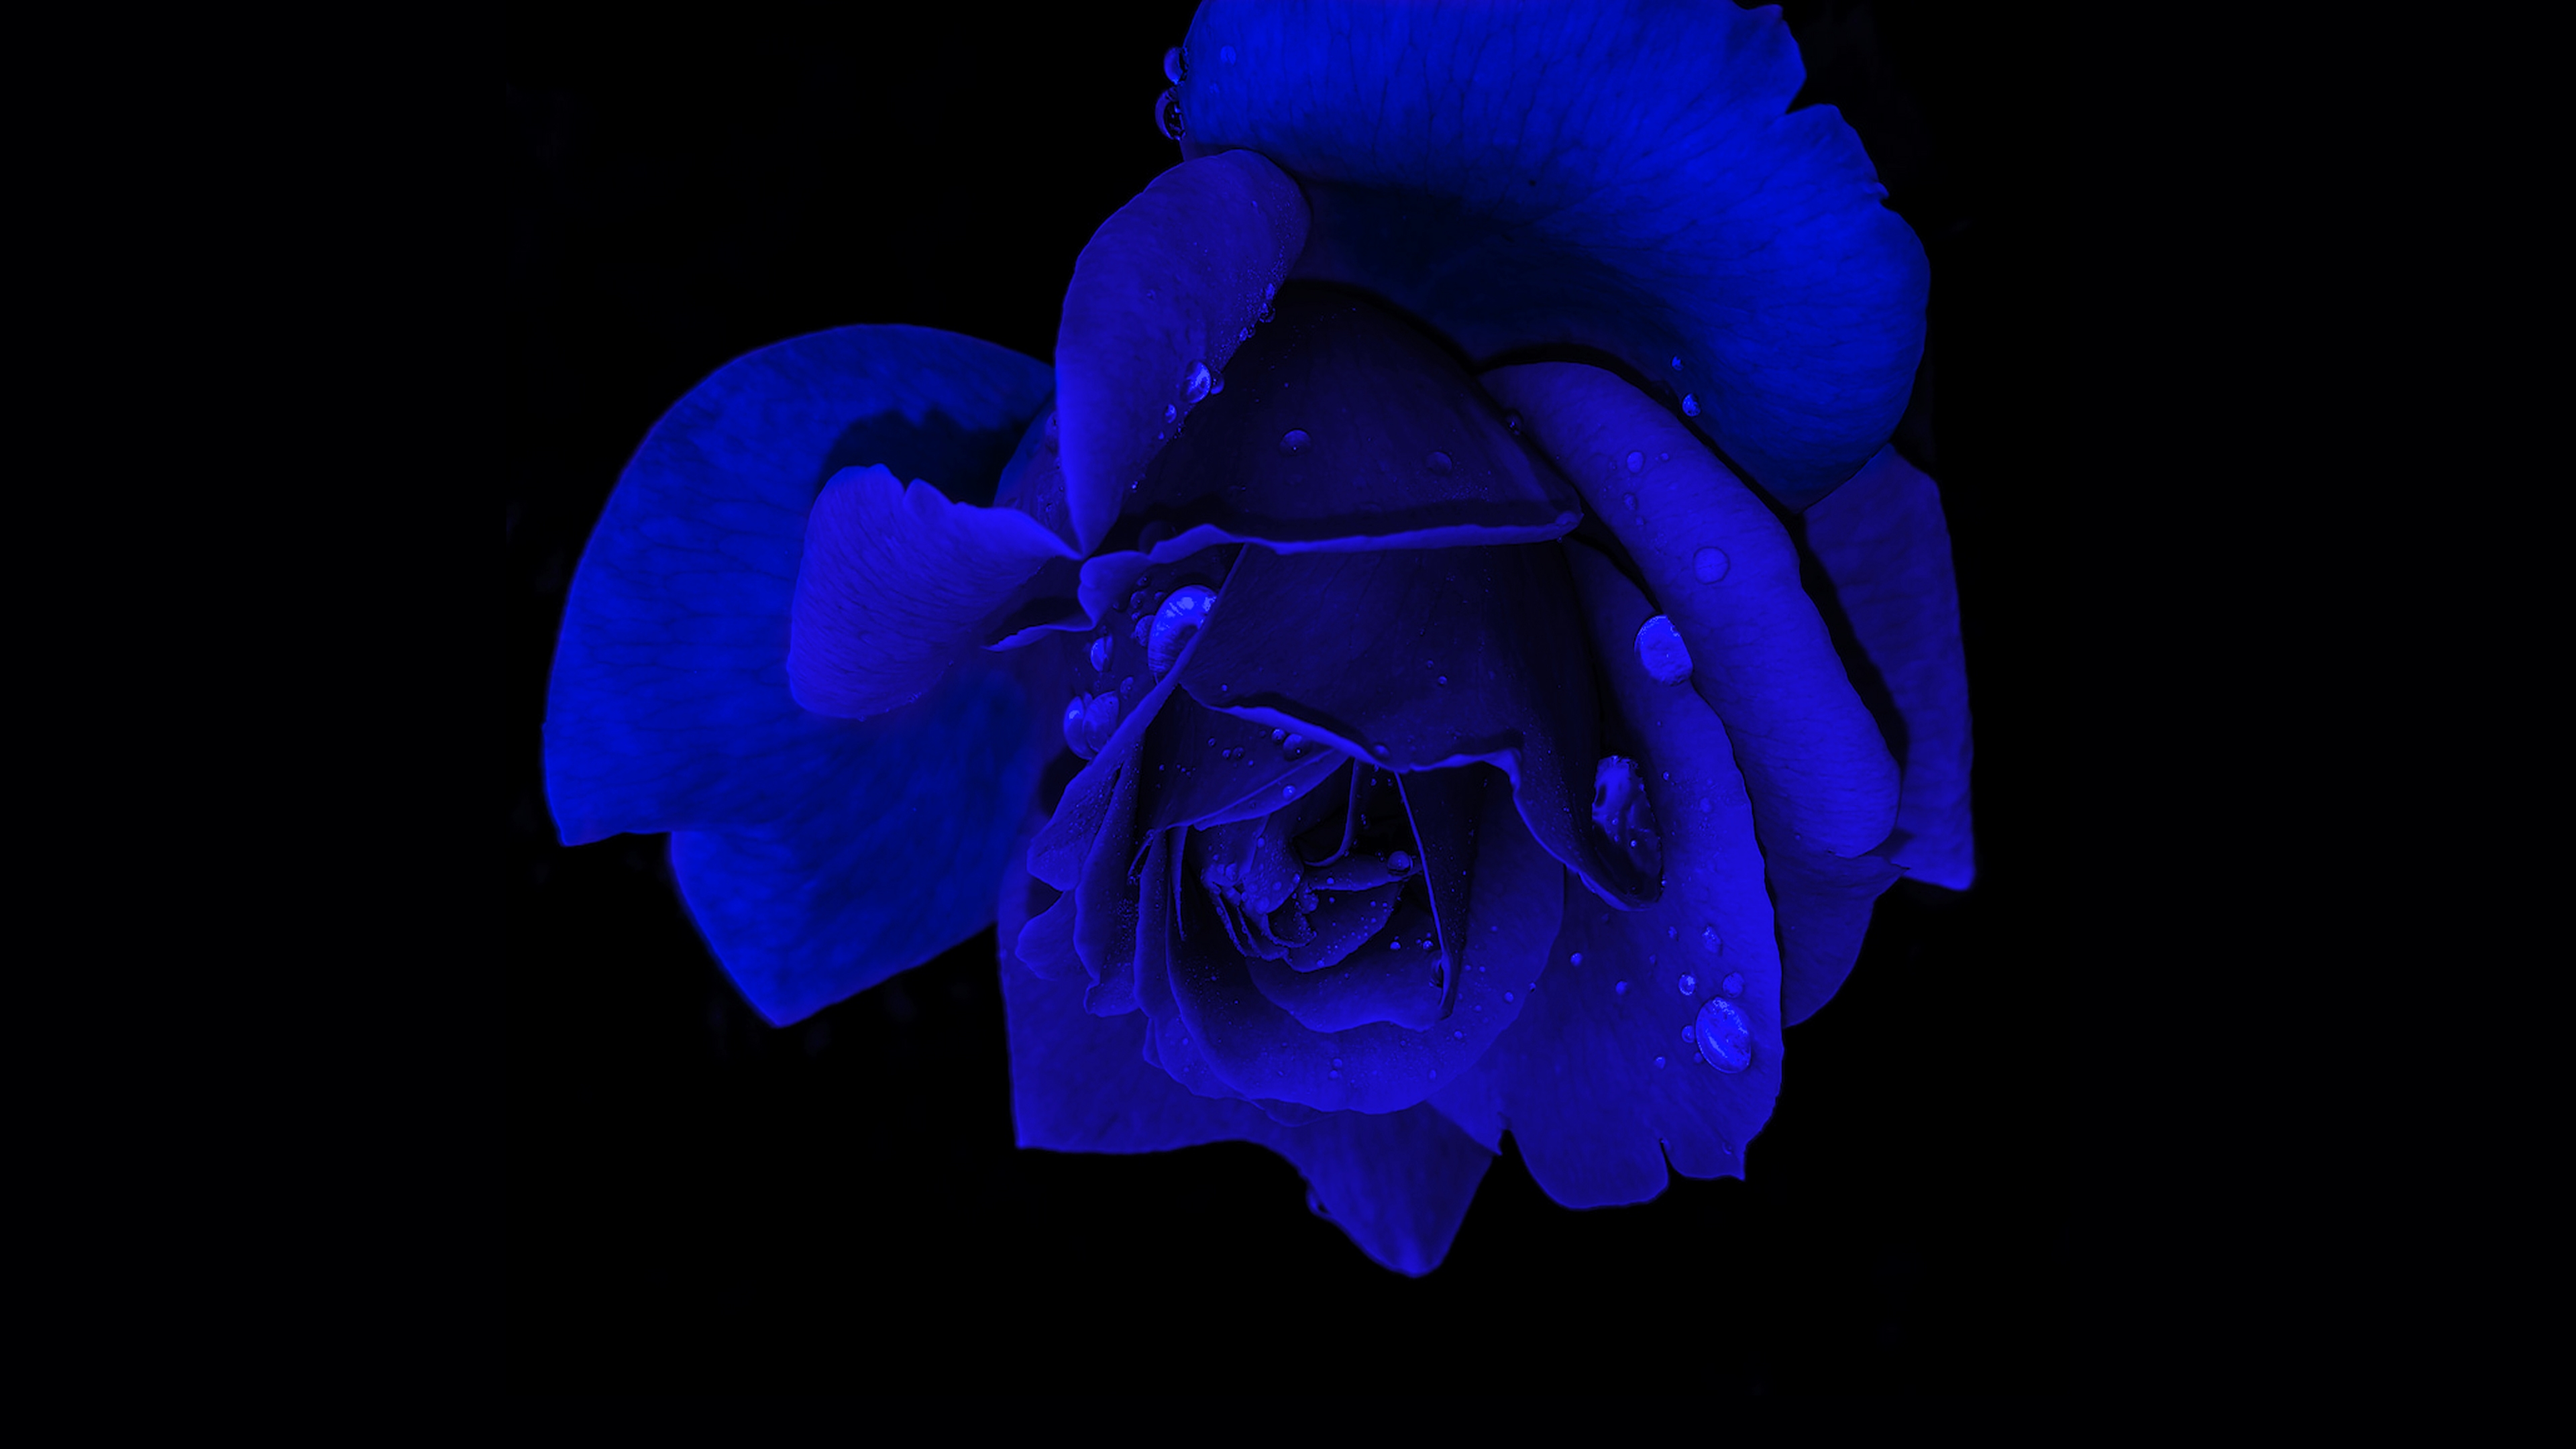 HD wallpaper, Amoled, Blue Rose, Black Background, Rose Flower